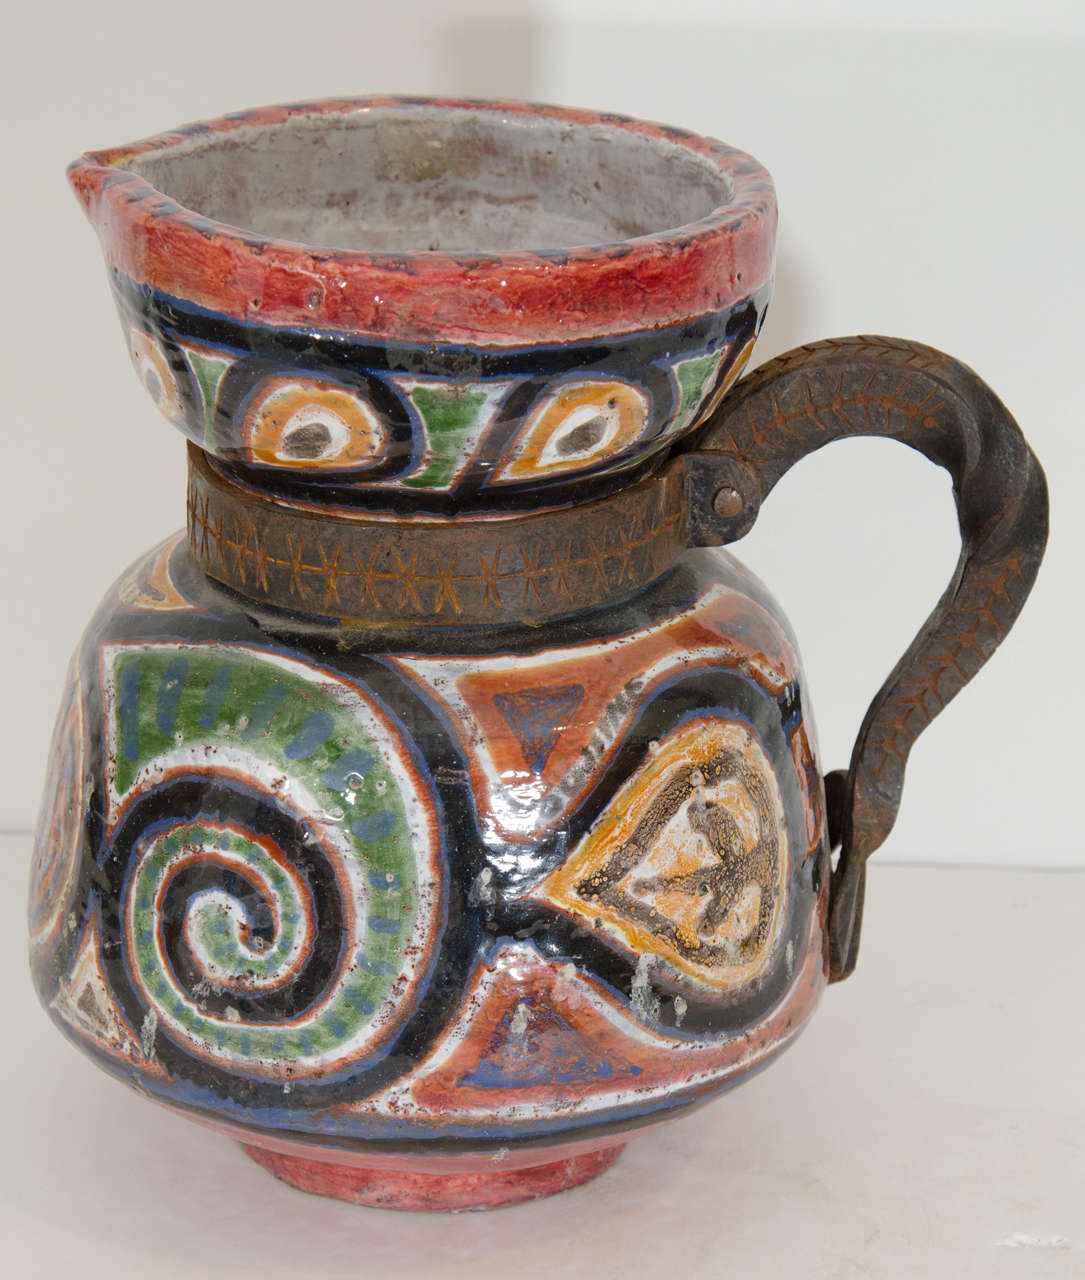 Iron handled ceramic vase.